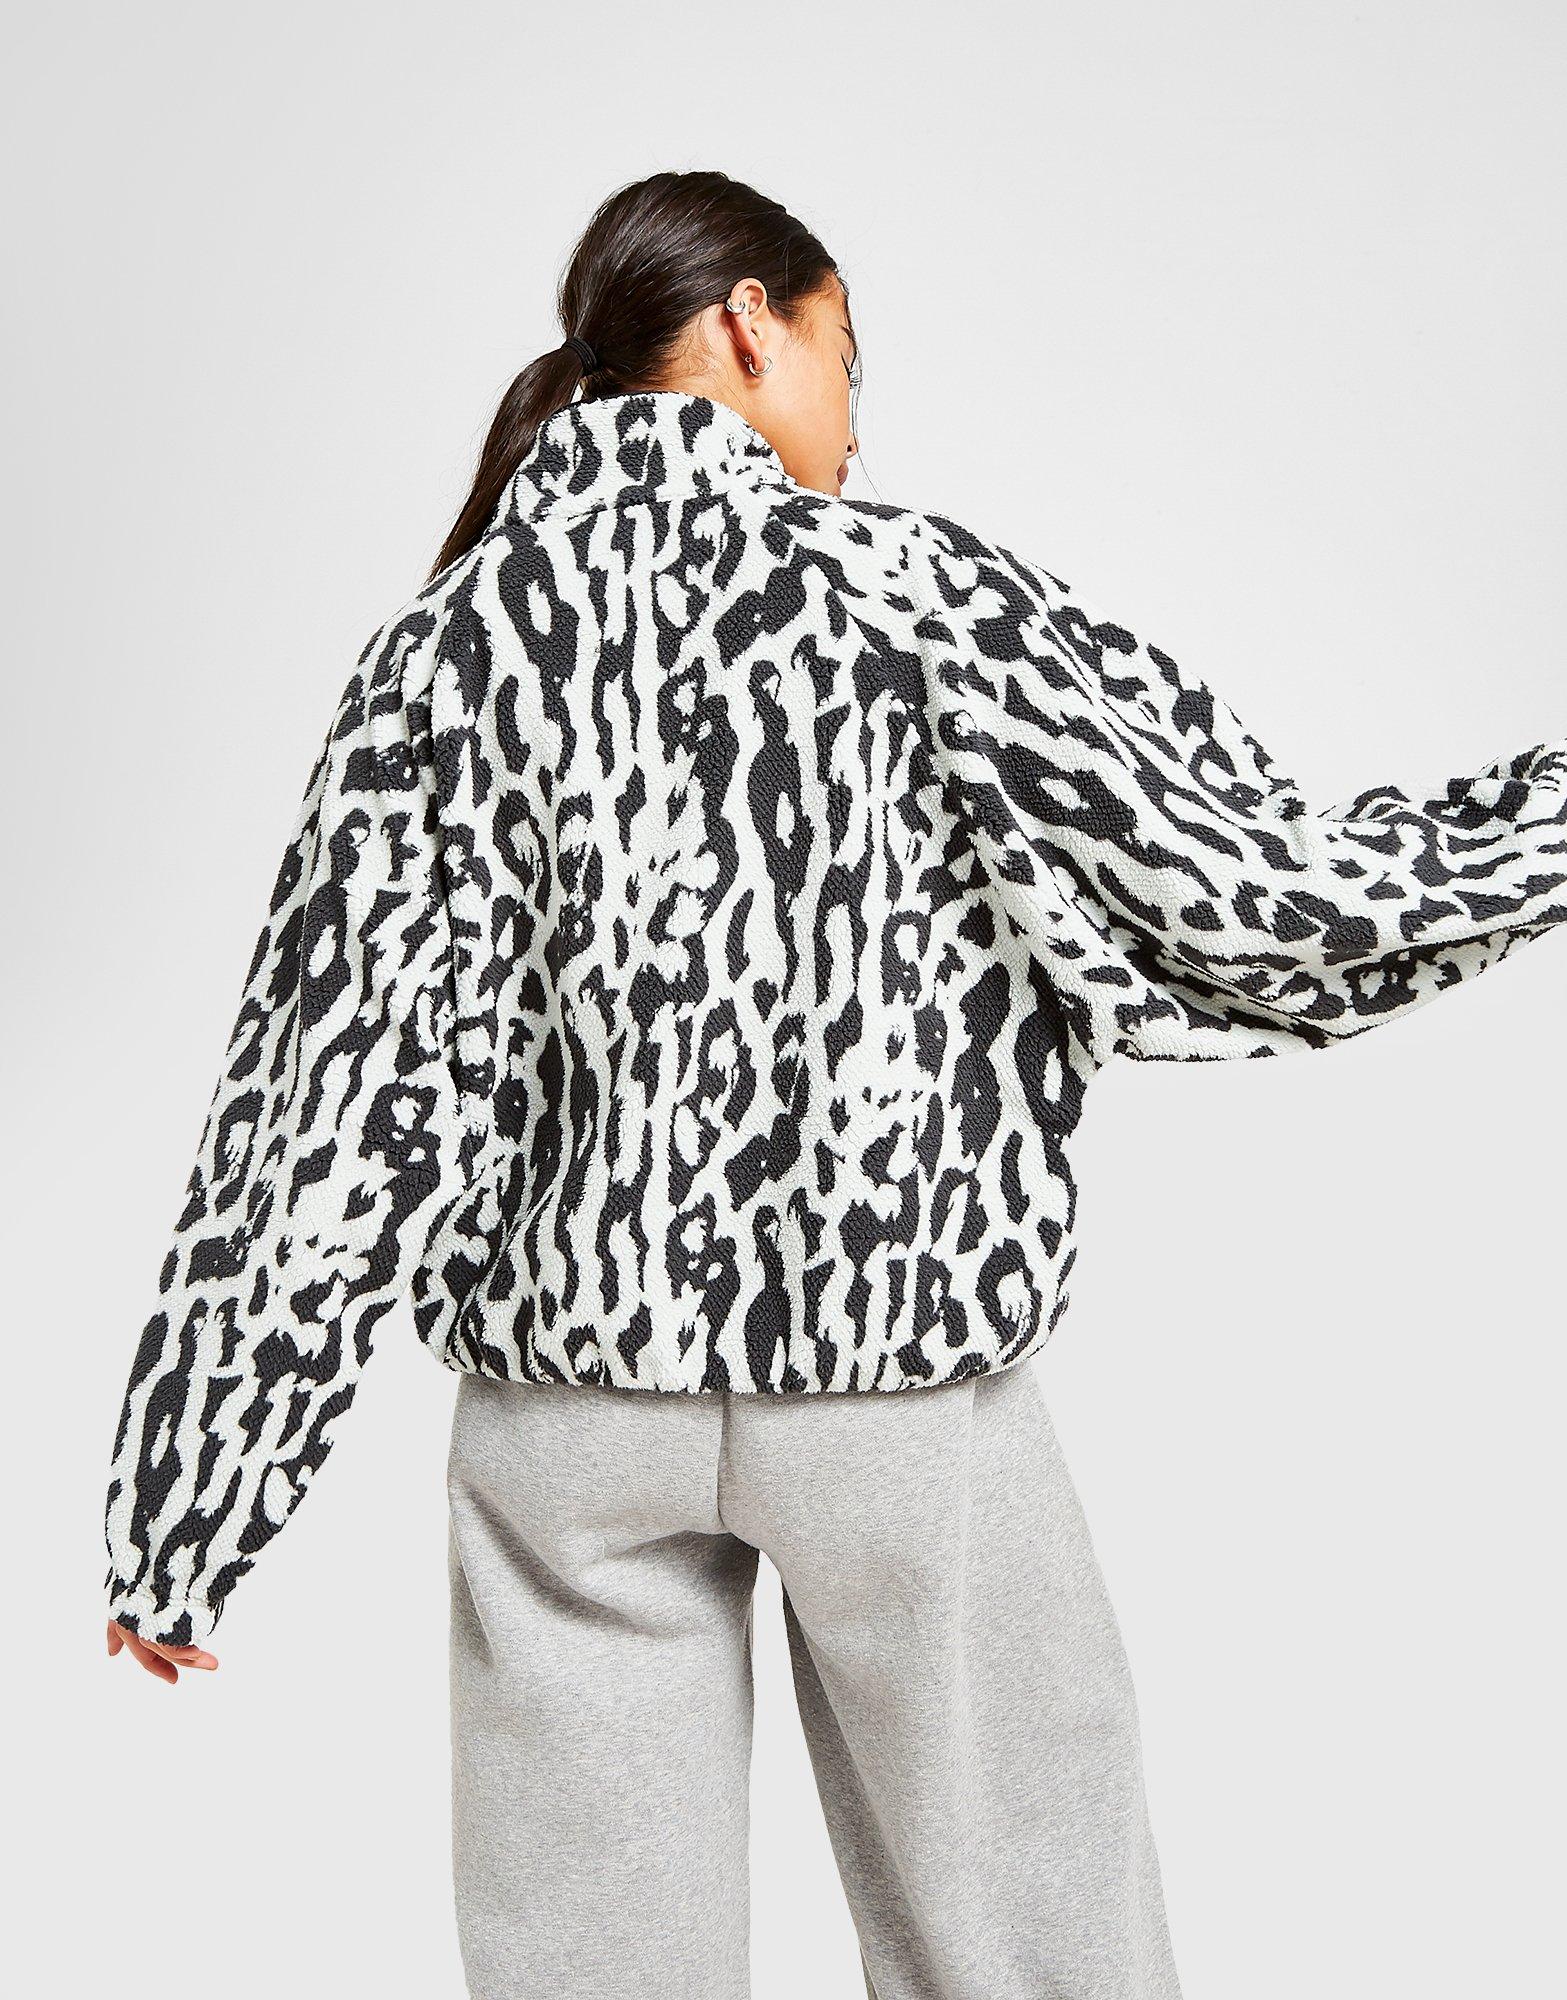 nike cheetah print jacket